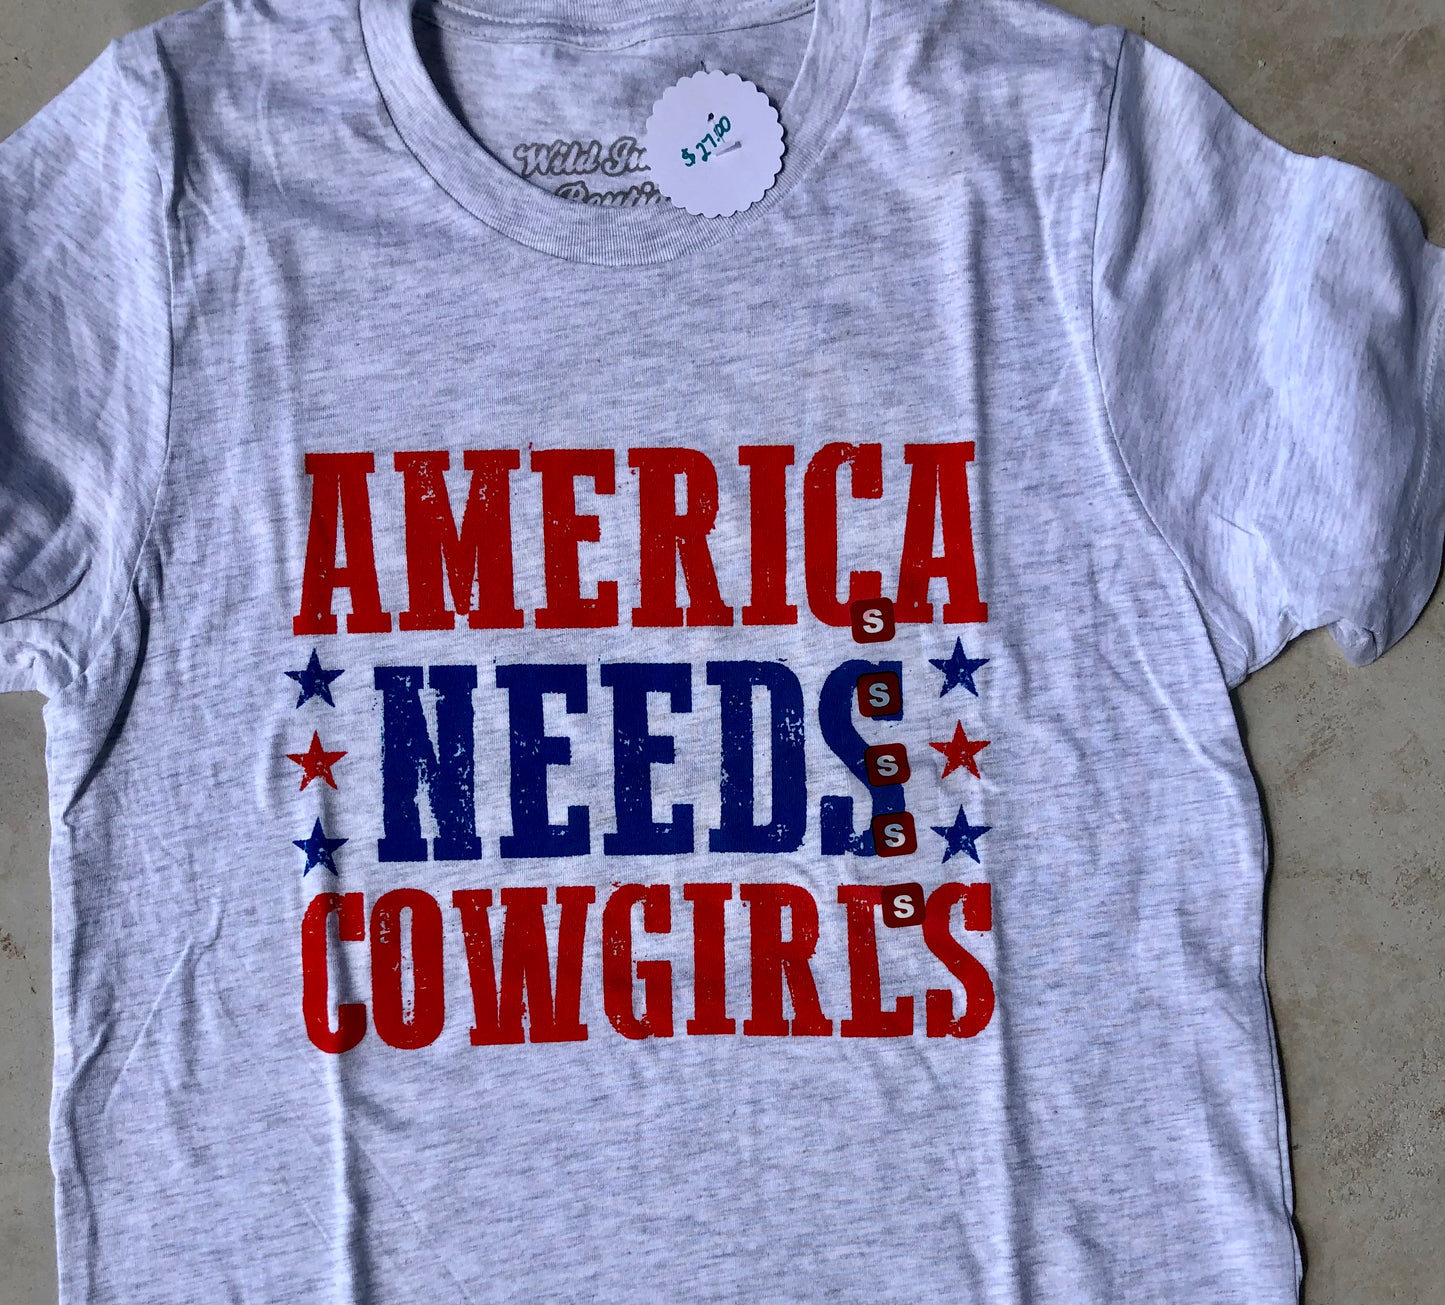 America Needs Cowgirls graphic tee